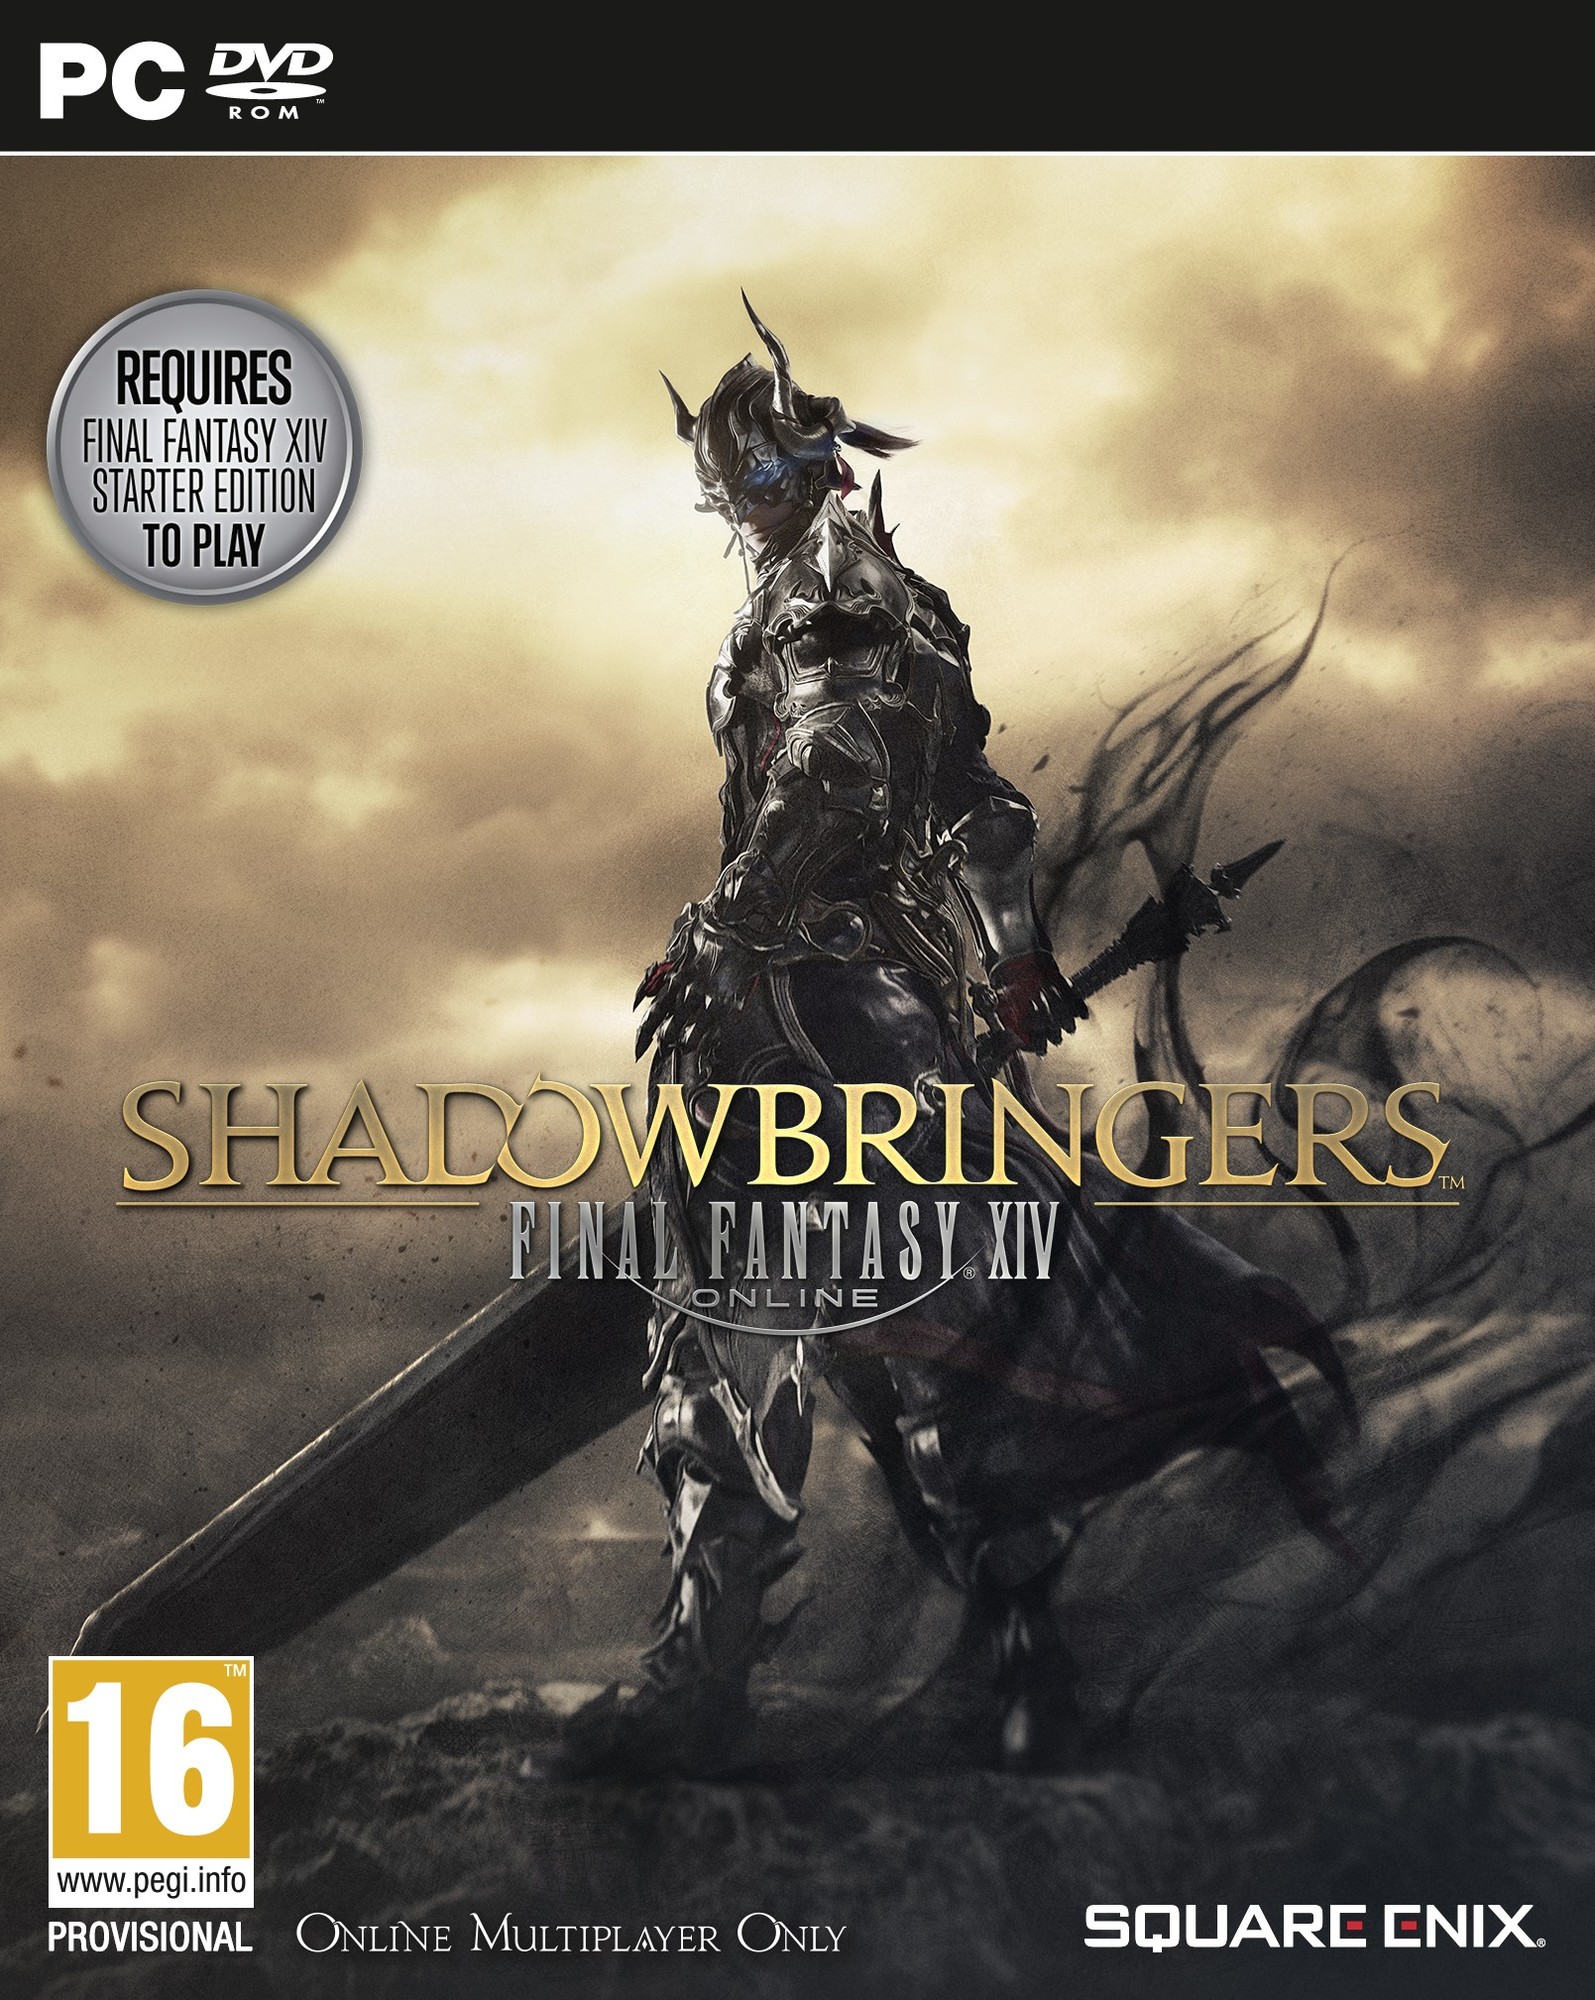 Final Fantasy XIV Online: Shadowbringers (PC), Square Enix